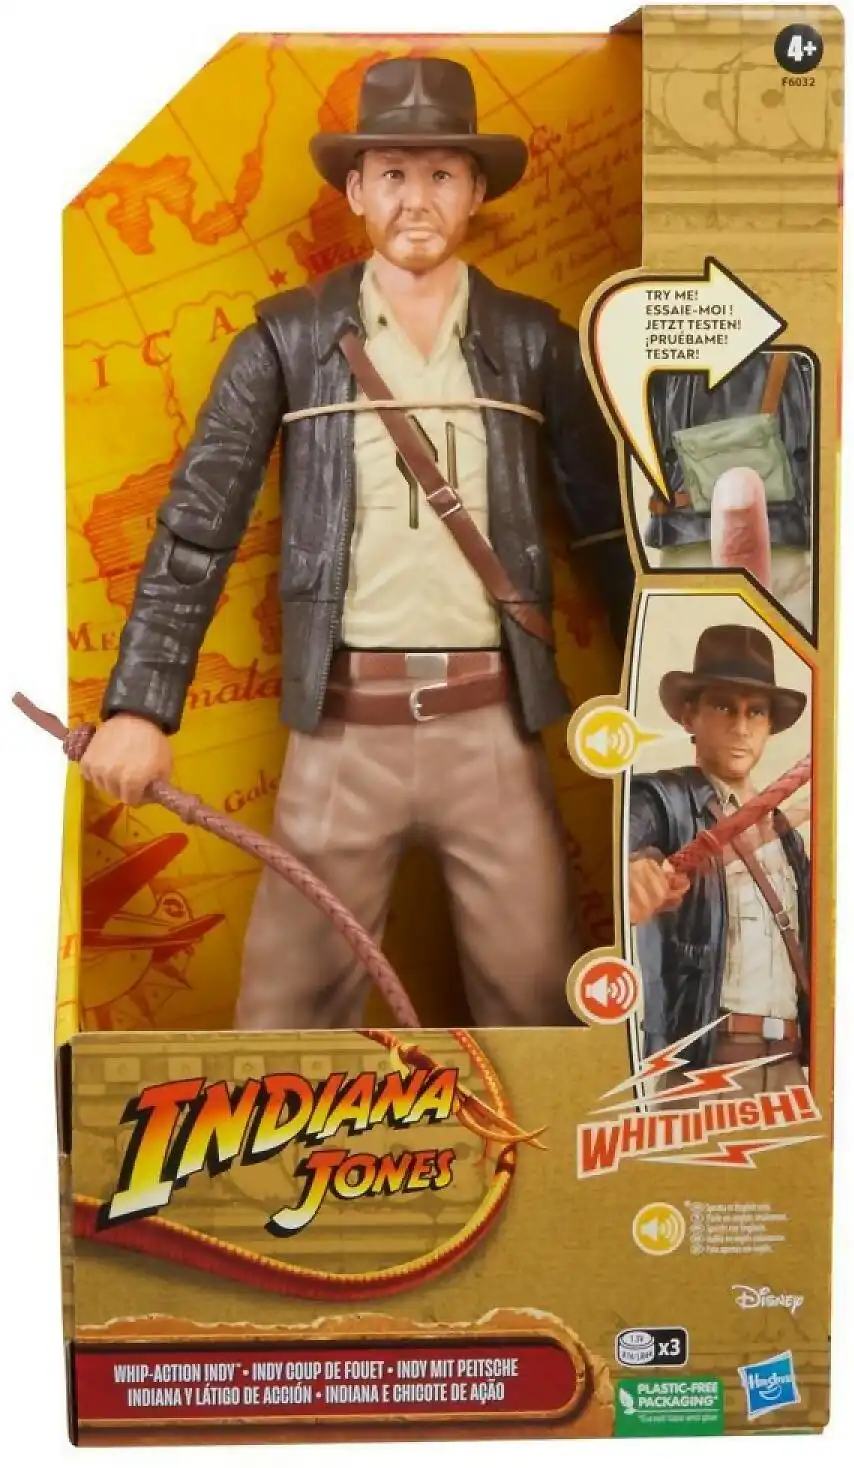 Indiana Jones - Indiana Jones Whip-action Indy Indiana Jones Action Figure With Sounds & Phrases (12”) - Hasbro